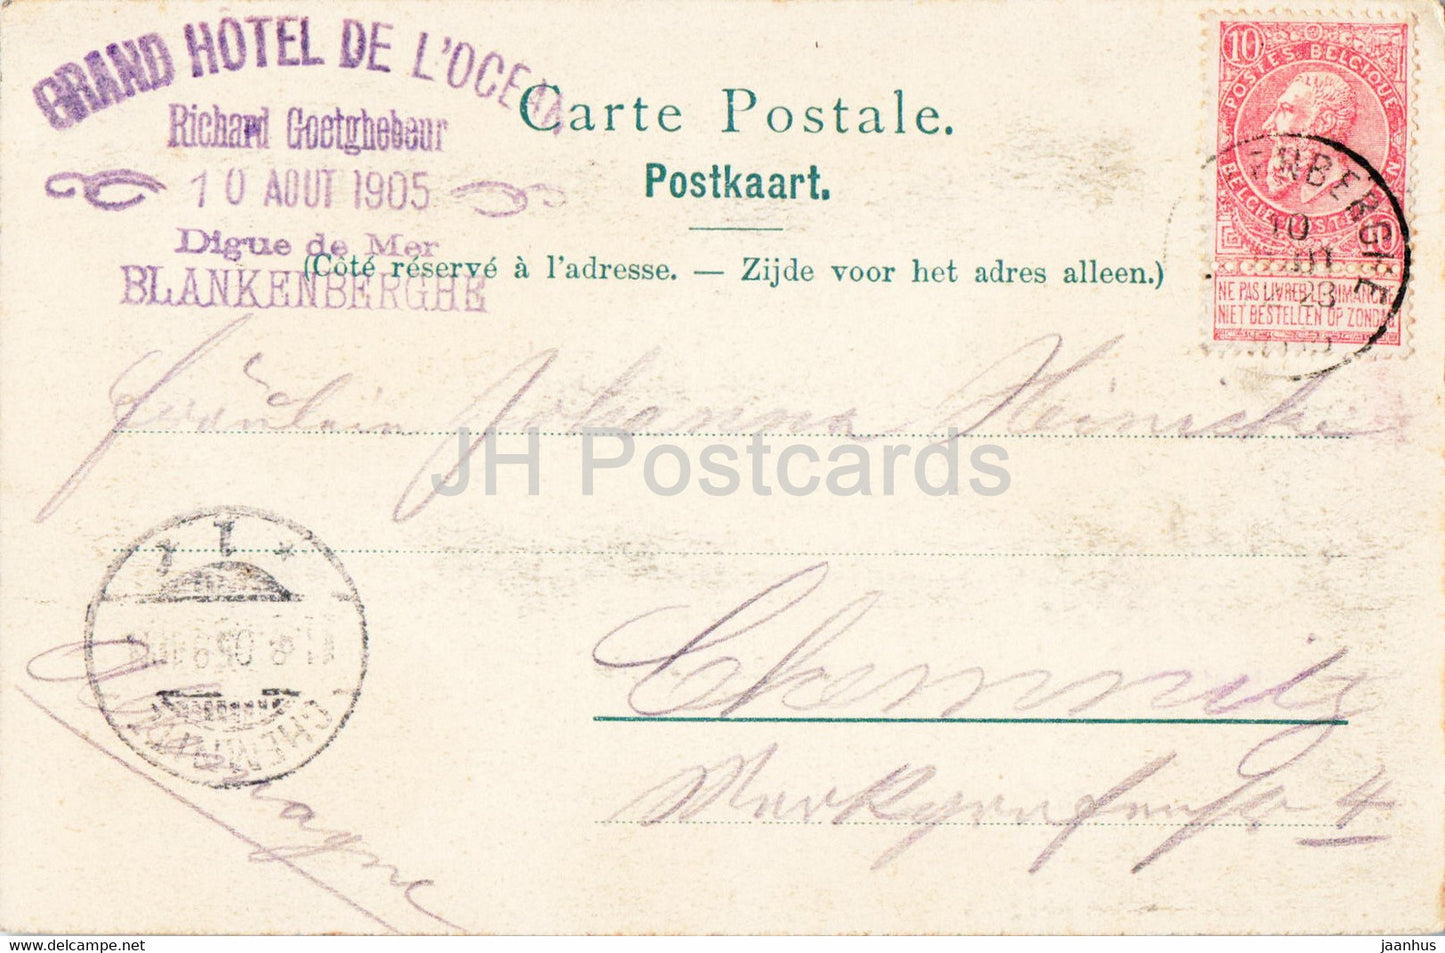 Blankenberge - Les Bains de Mer - Grand Hotel de L'Ocean - old postcard - 1905 - Belgium - used